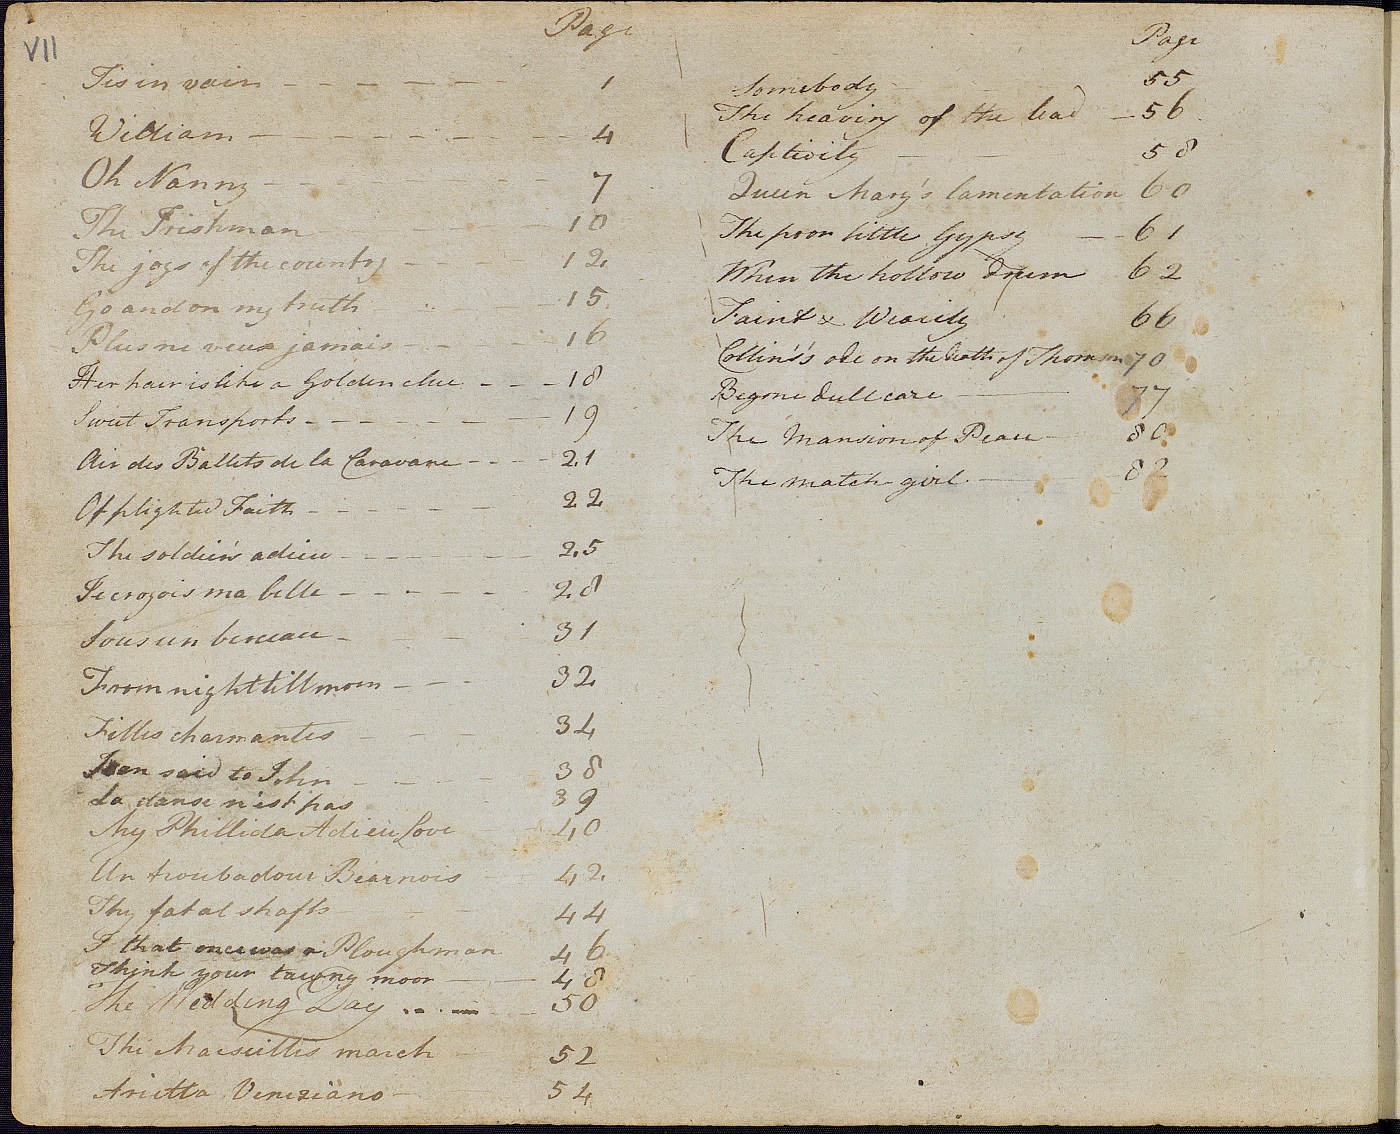 Contents page, written in Jane Austen's hand